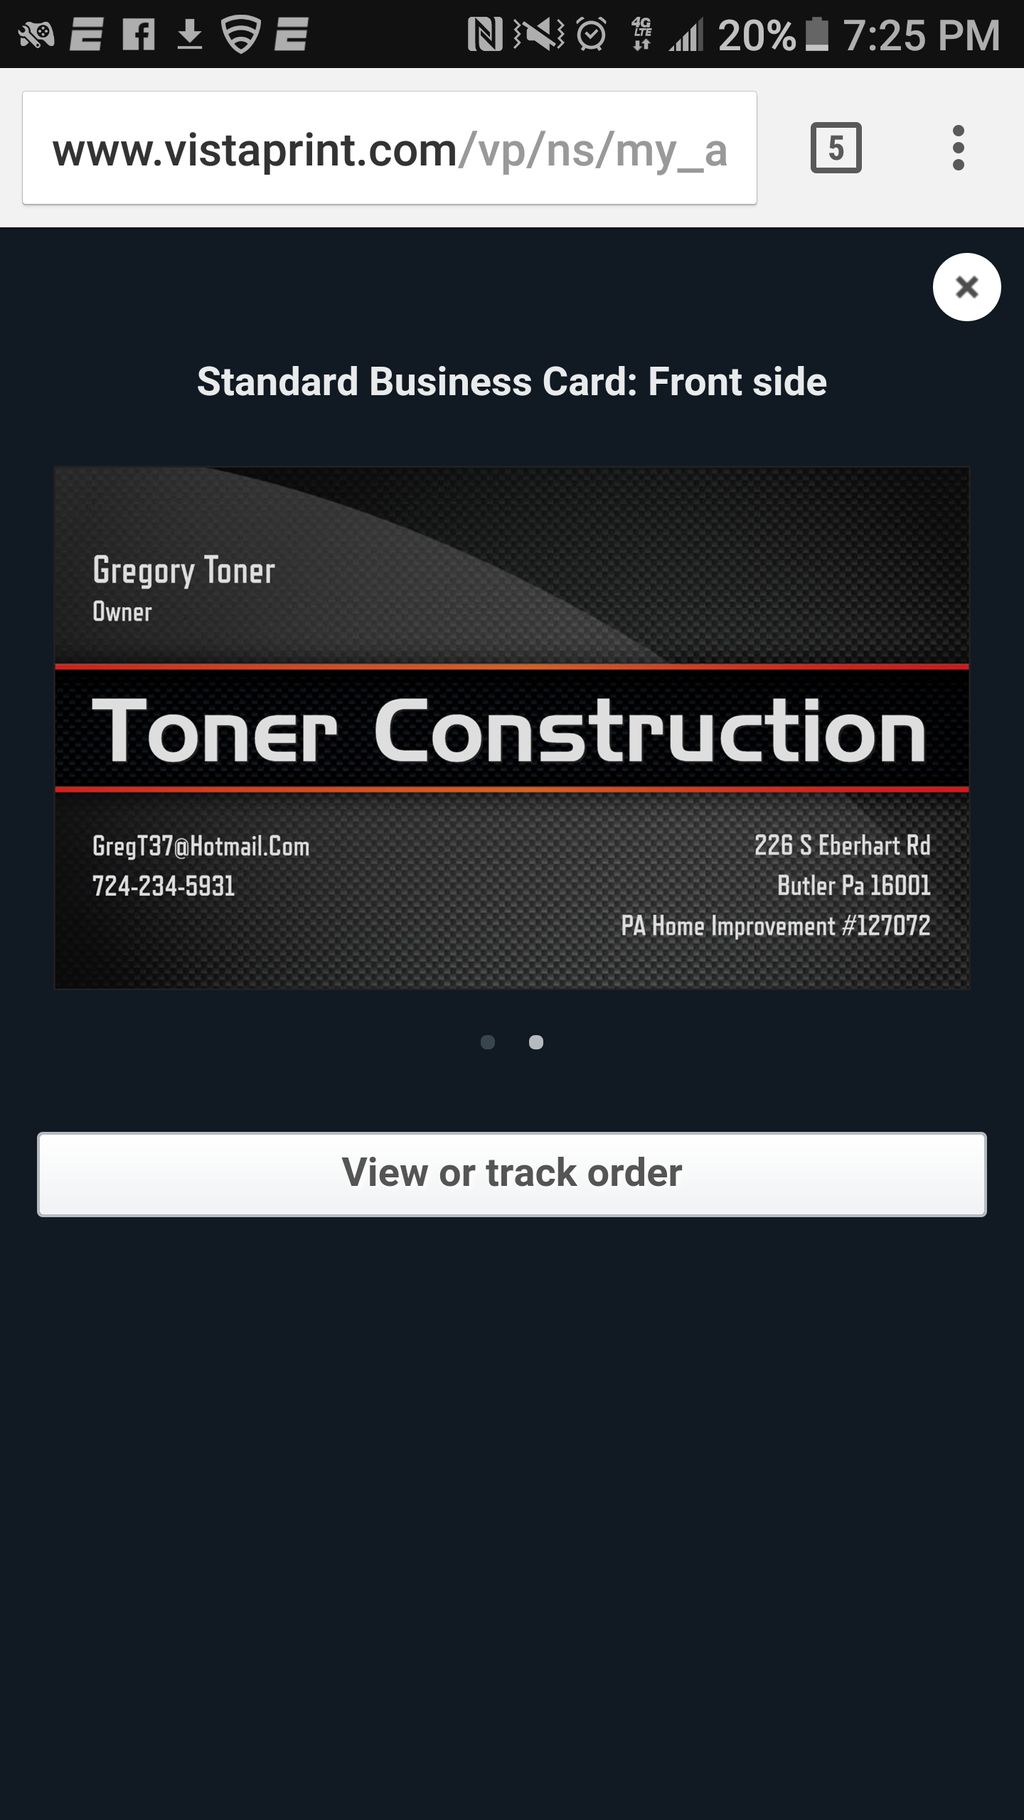 Toner Construction